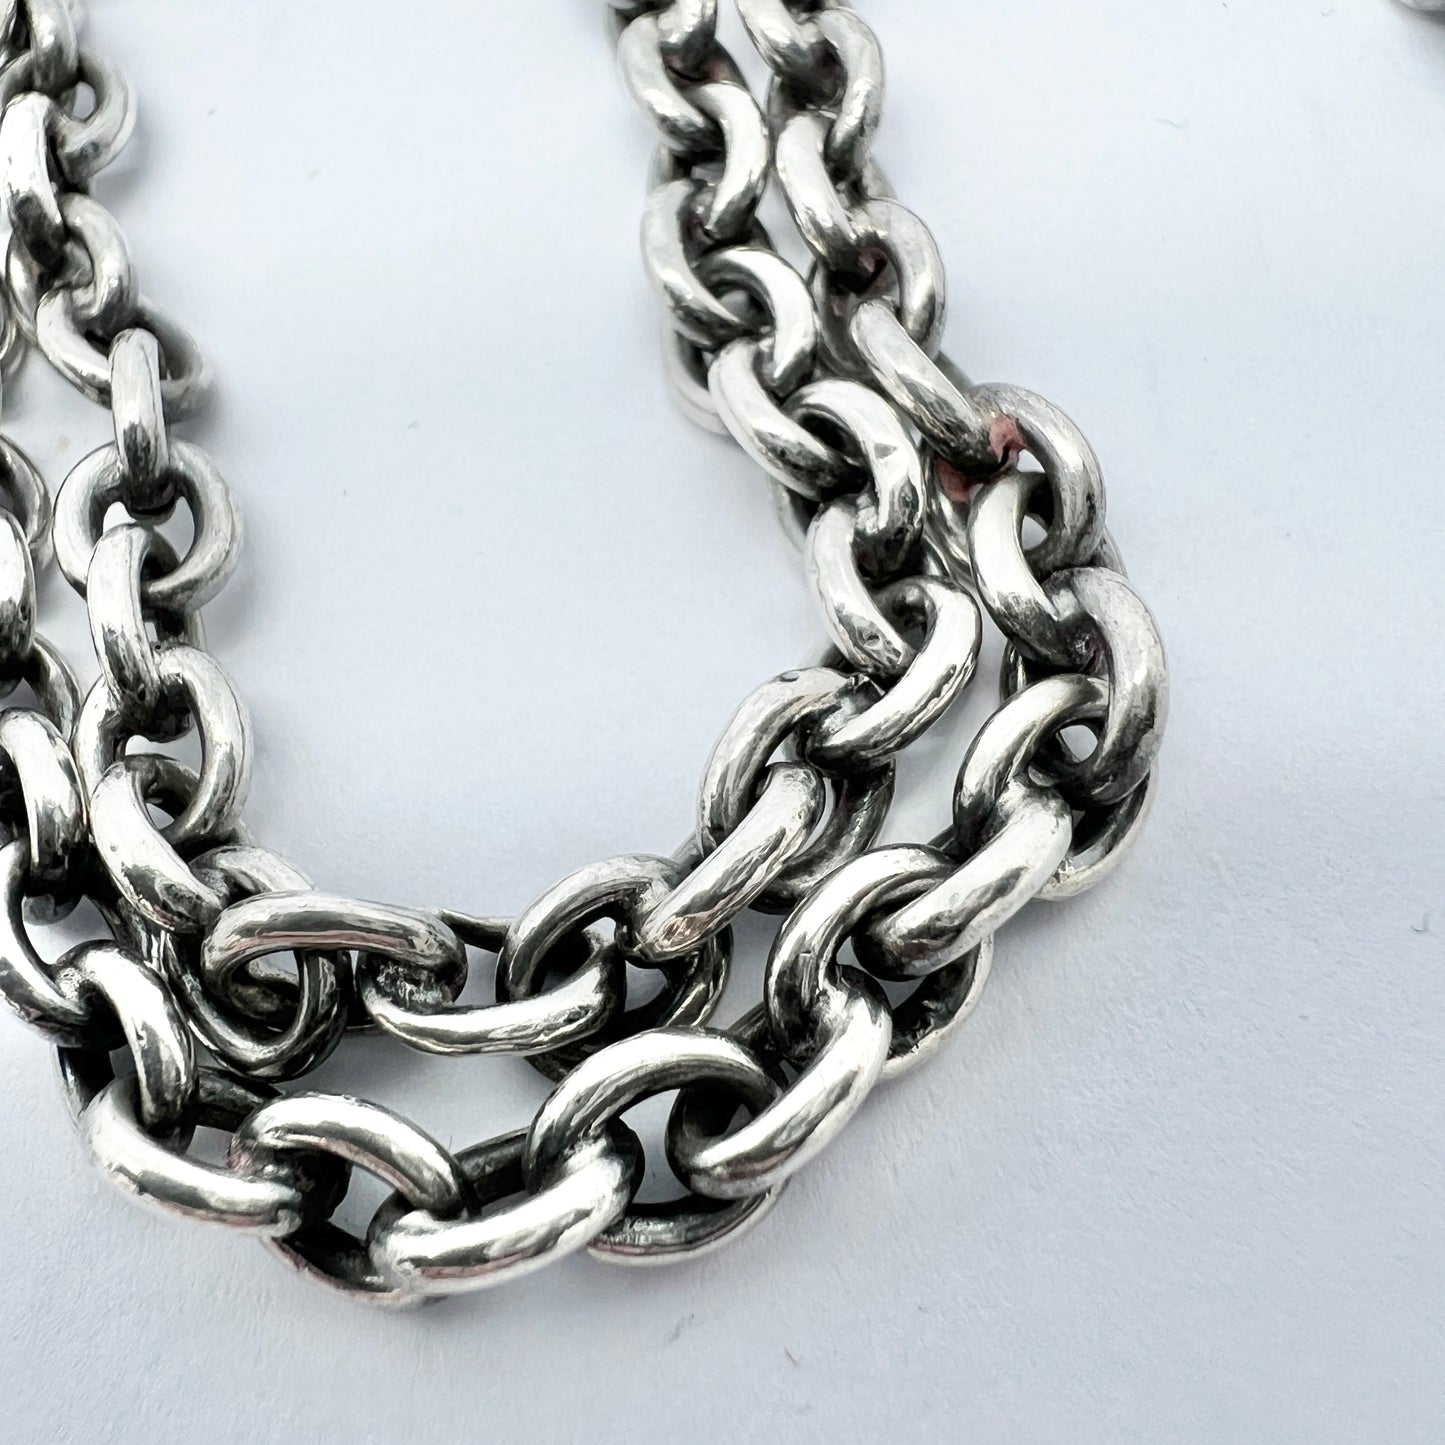 Sweden c 1900. Antique 830 Silver 56 inch Longuard Chain Necklace.